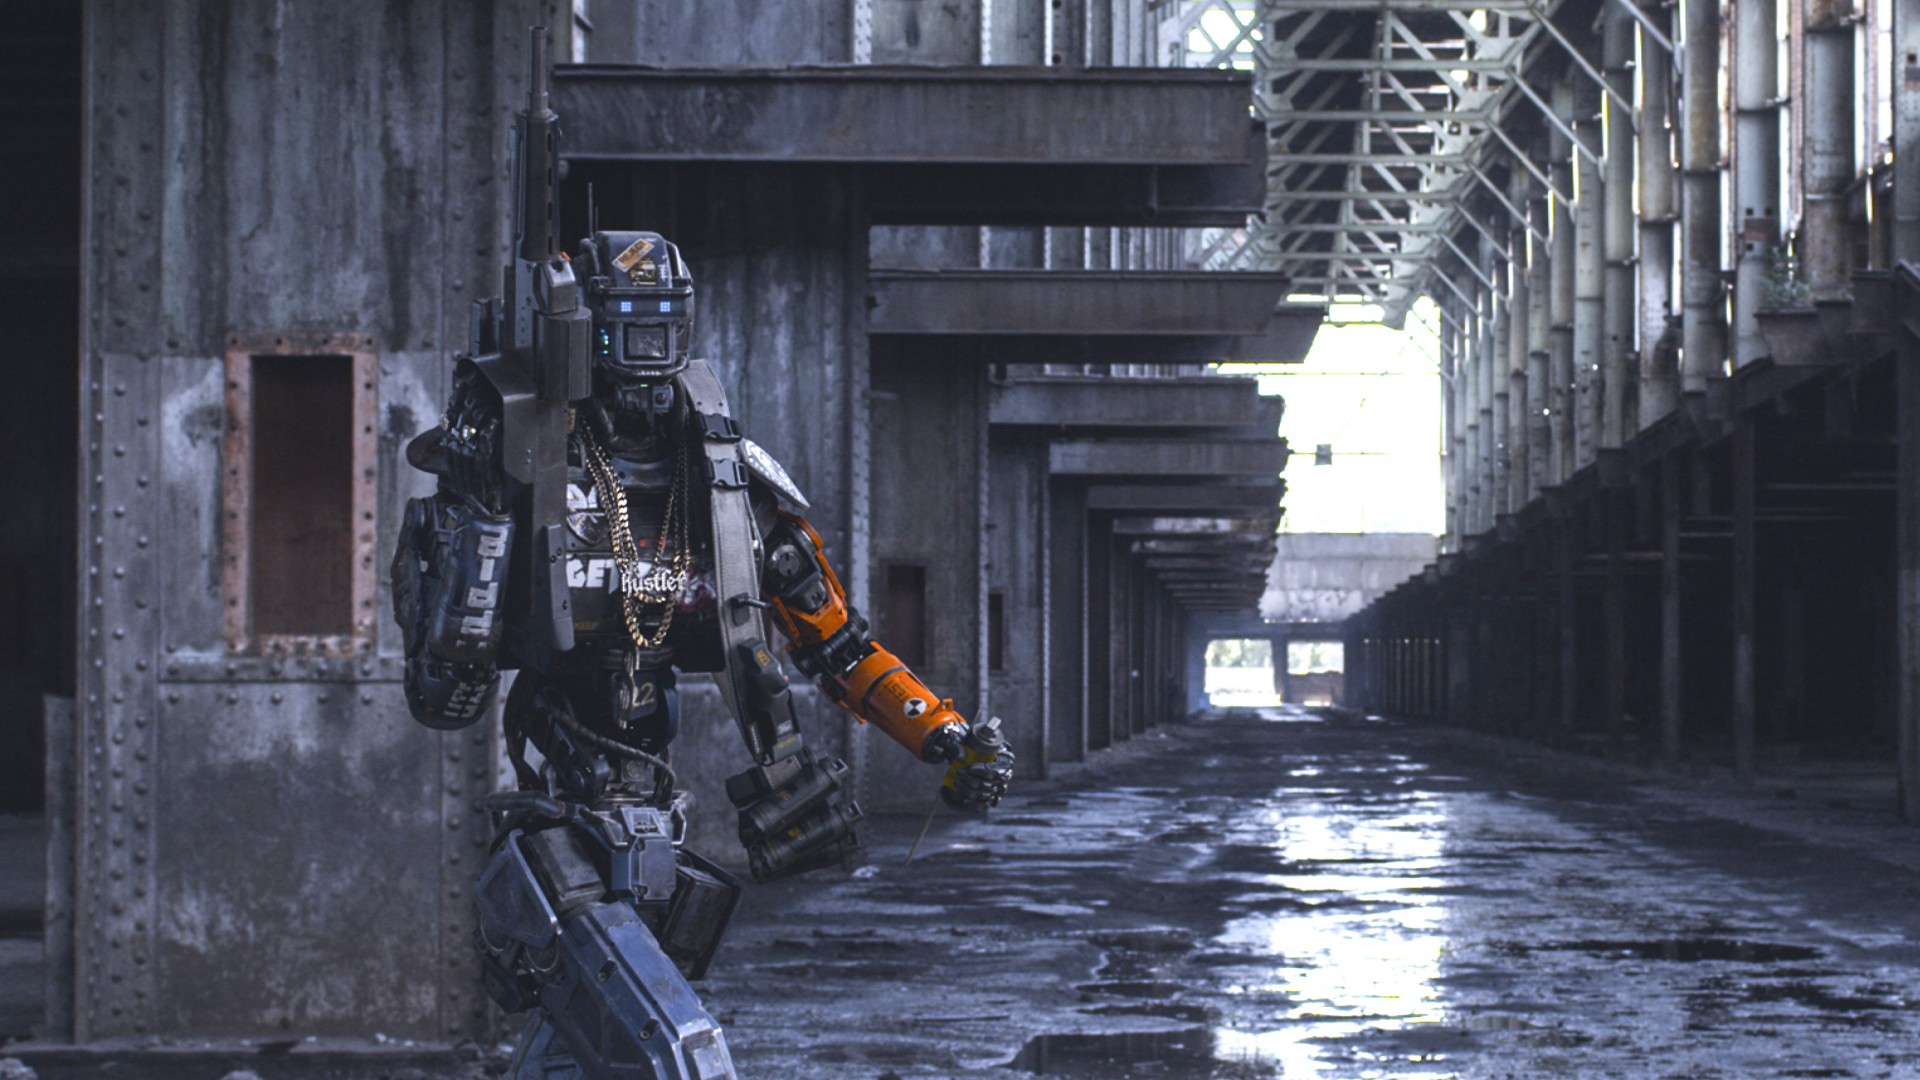 Робот по имени Чаппи, кино, фильм, робот, Chappie, Best Movies of 2015, Die Antwoord, robot, gun (horizontal)